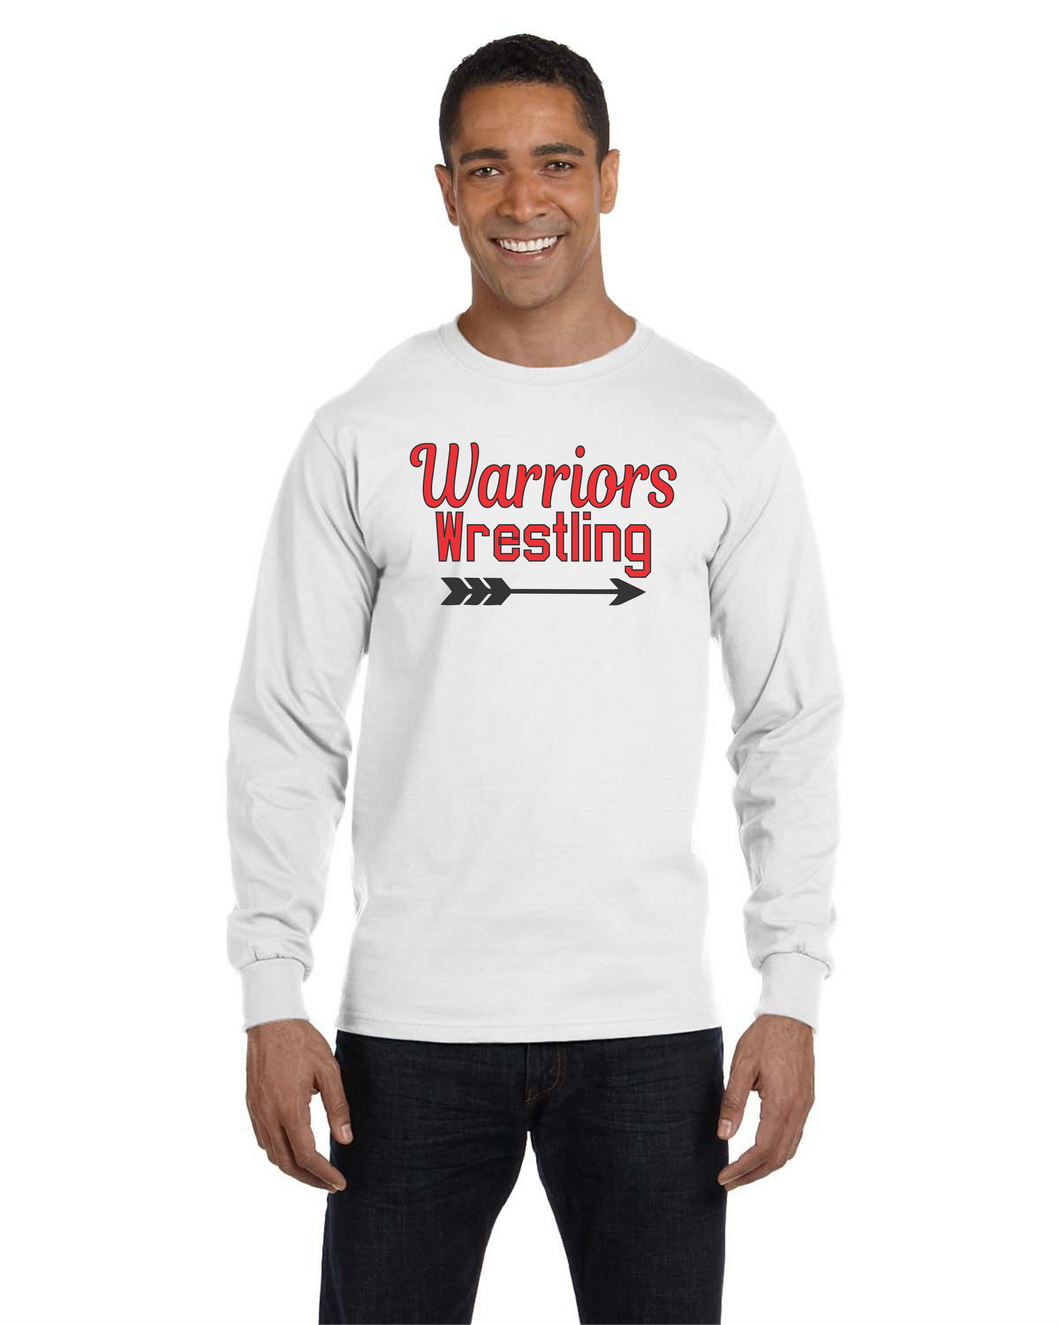 CHS-WRES-516-4 - Gildan 5.5 oz., 50/50 Long-Sleeve T-Shirt - Warriors Wrestling Logo